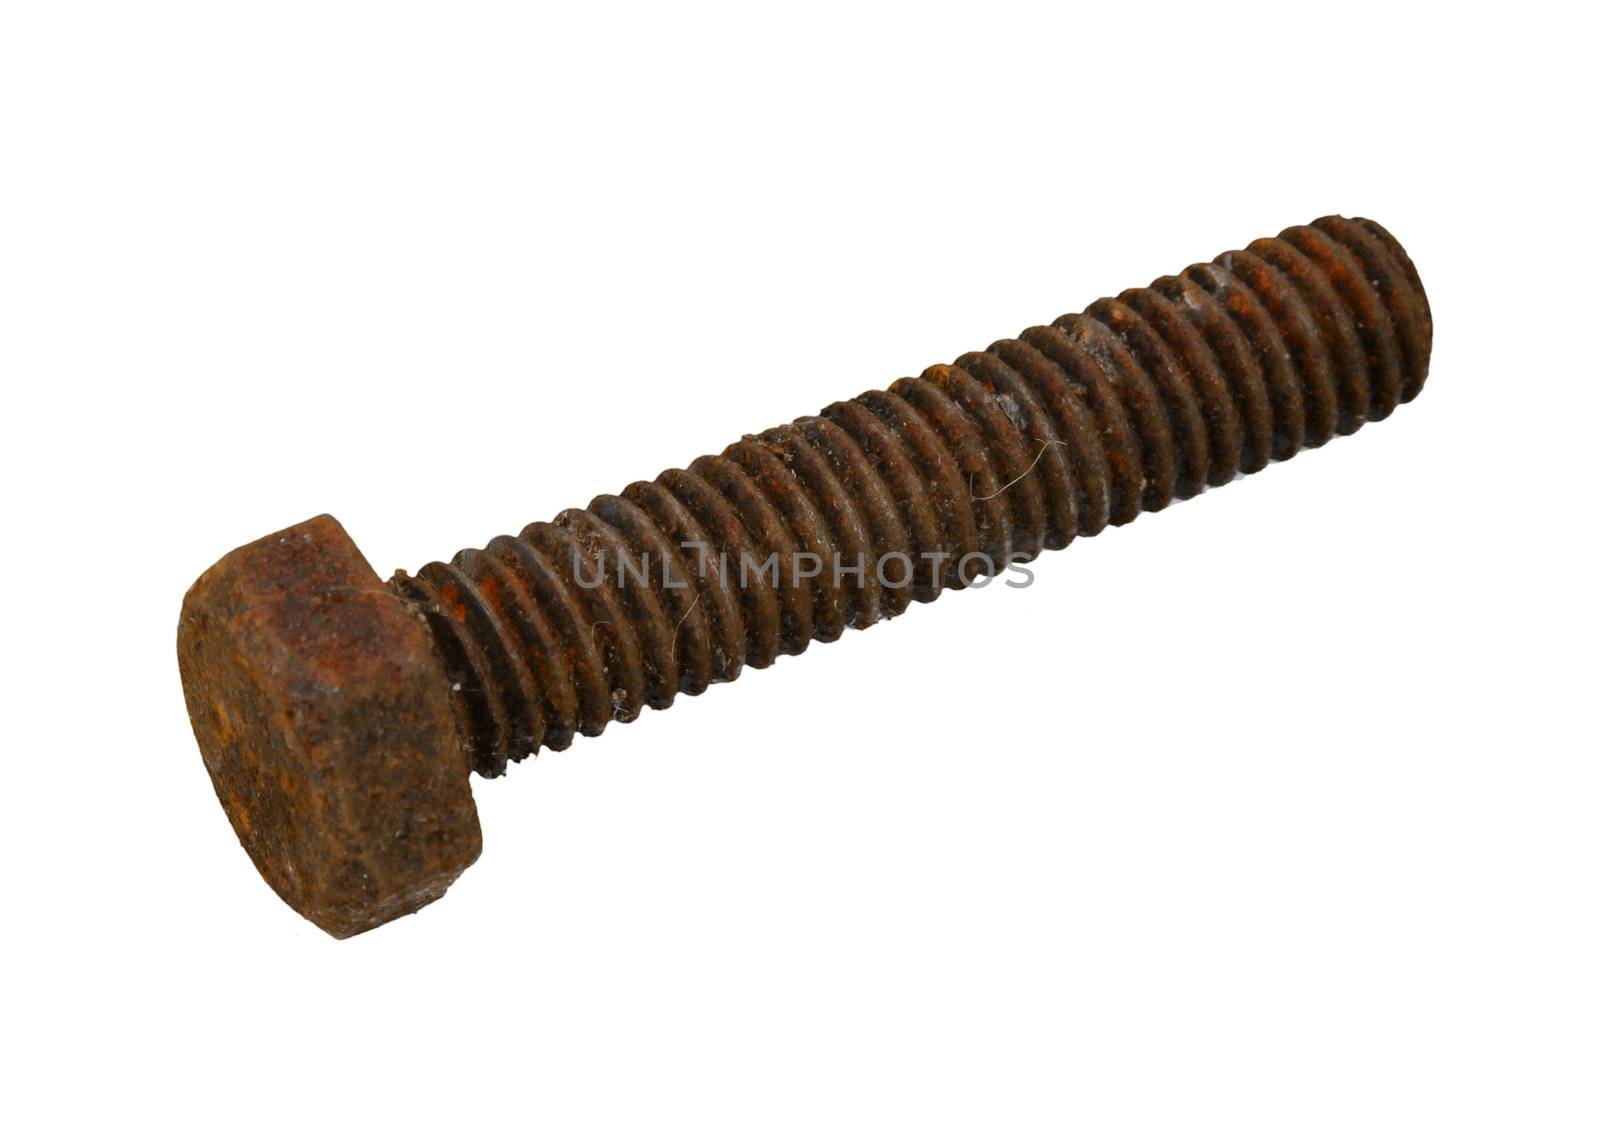 Rusty bolt by ianlangley